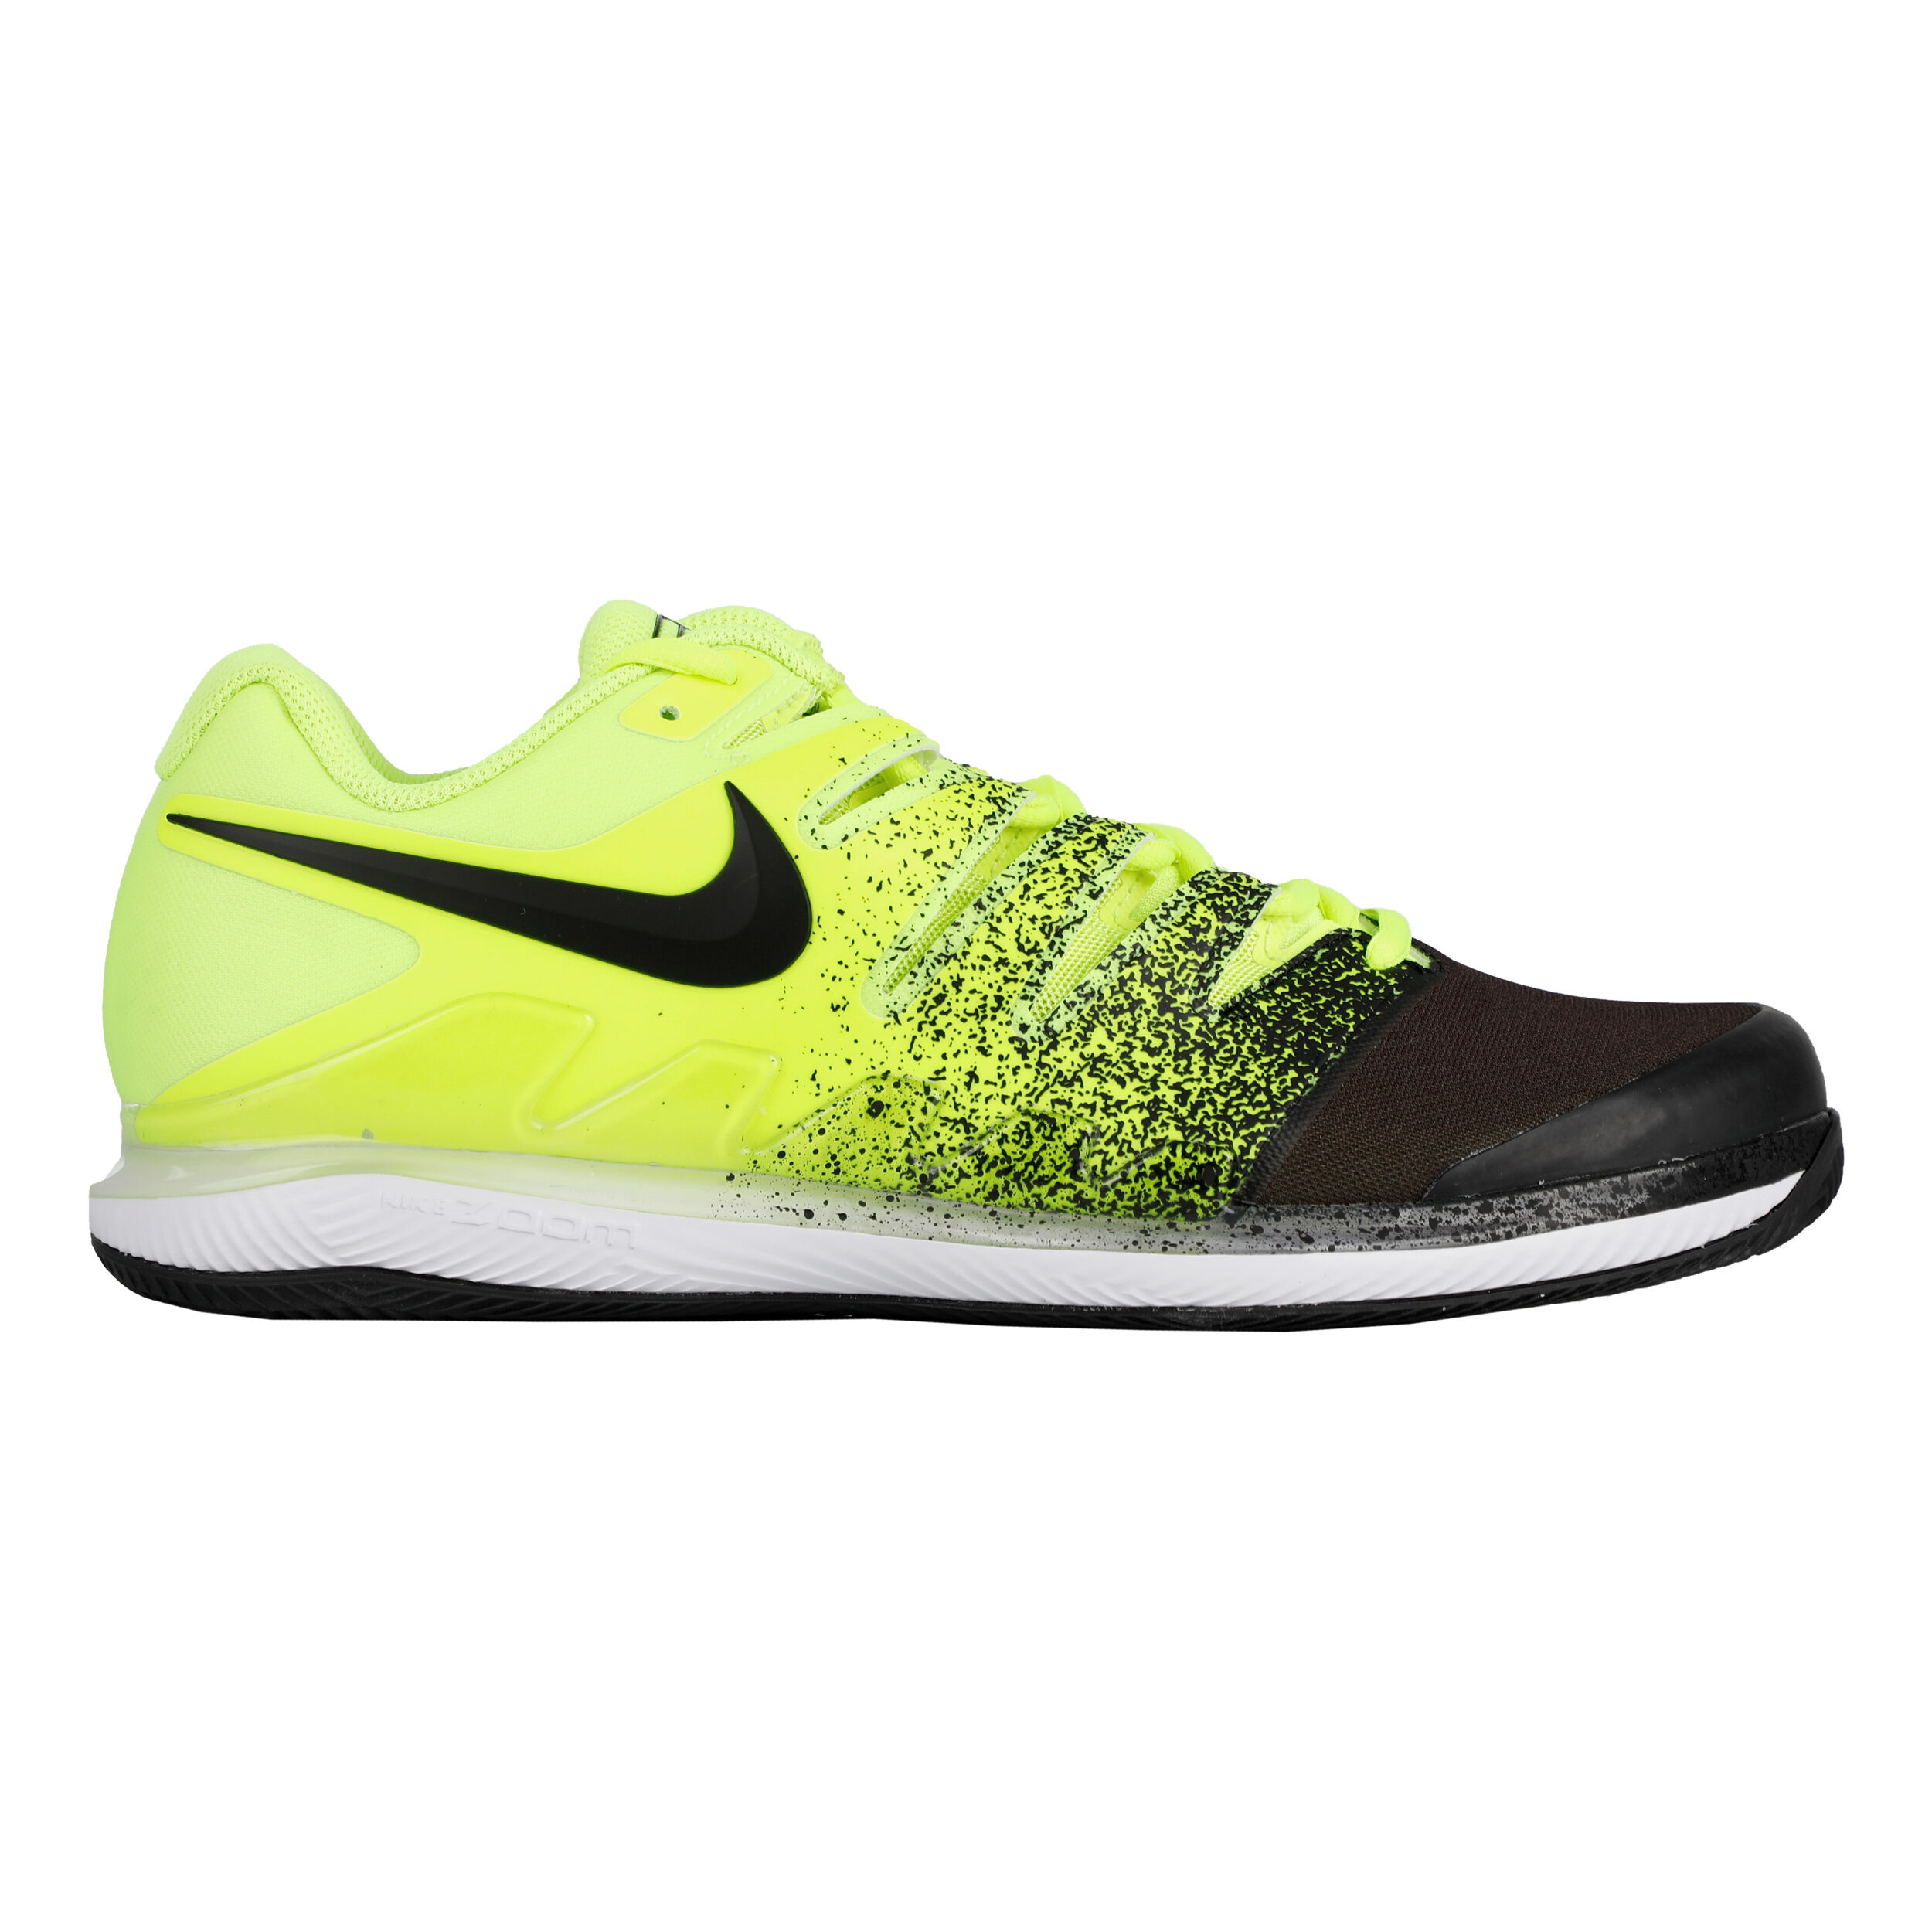 buy Nike Air Zoom Vapor X Clay Court Shoe Men - Neon Green, Light ...